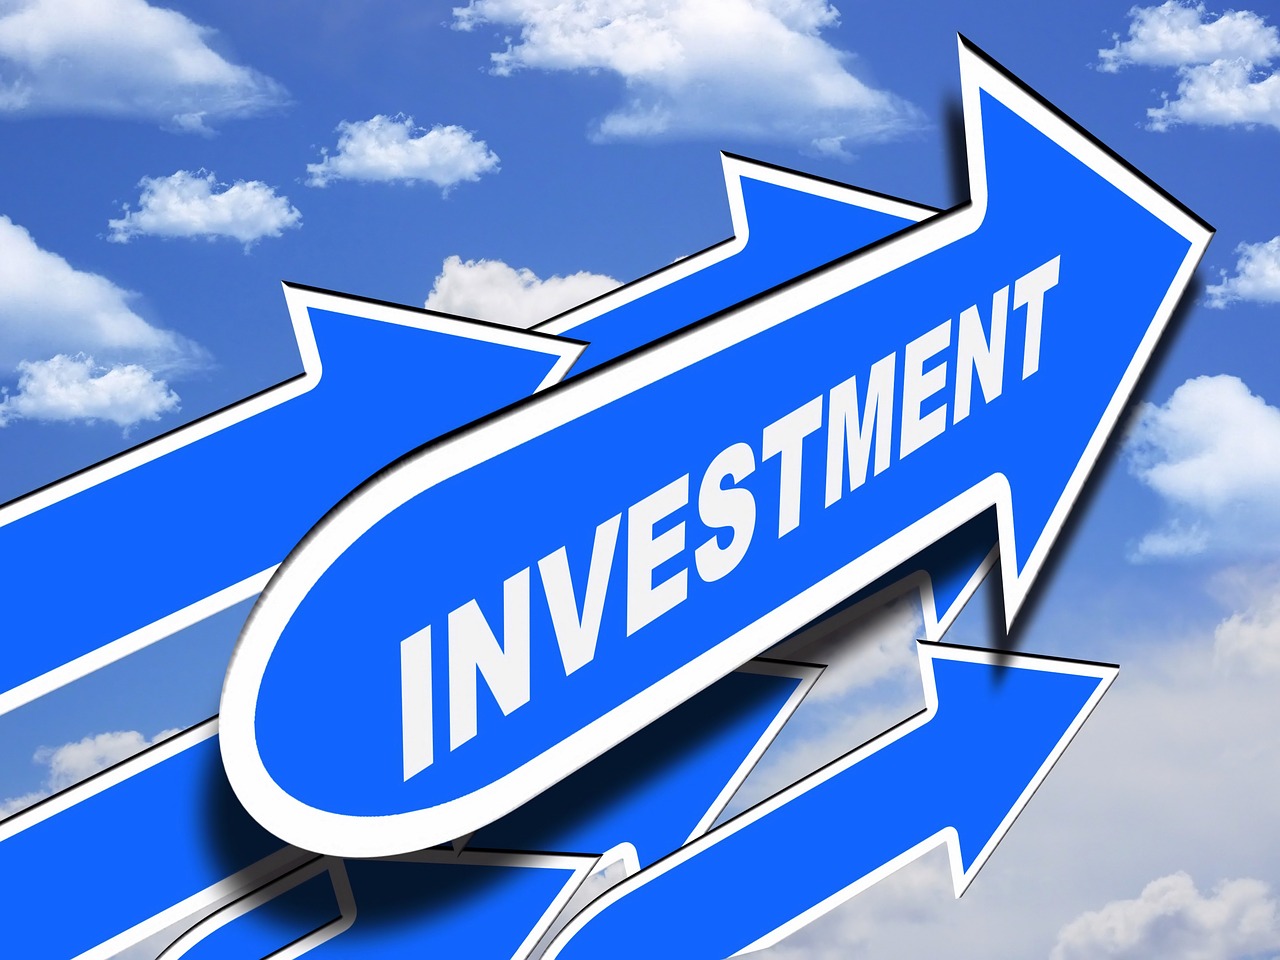 Anlage Investment Borse Pixabay kalhh